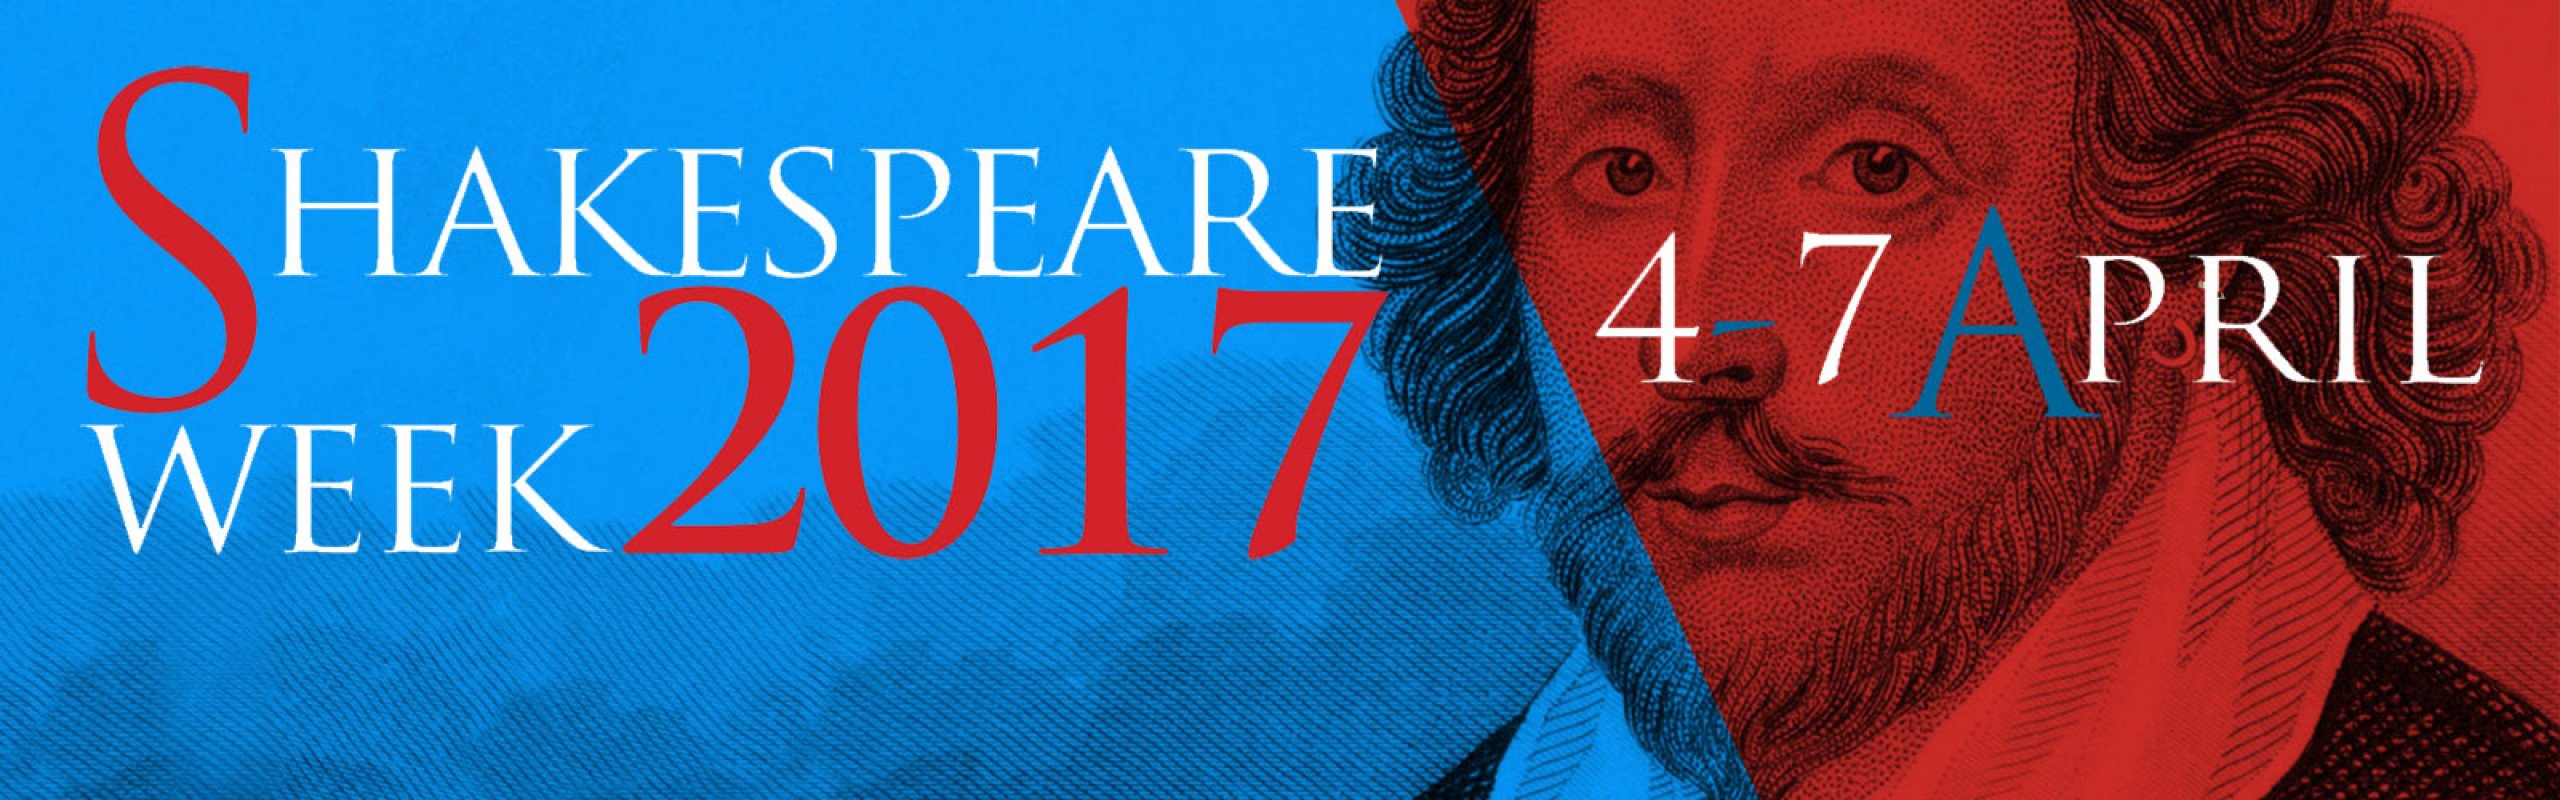 Shakespeare Week 2017